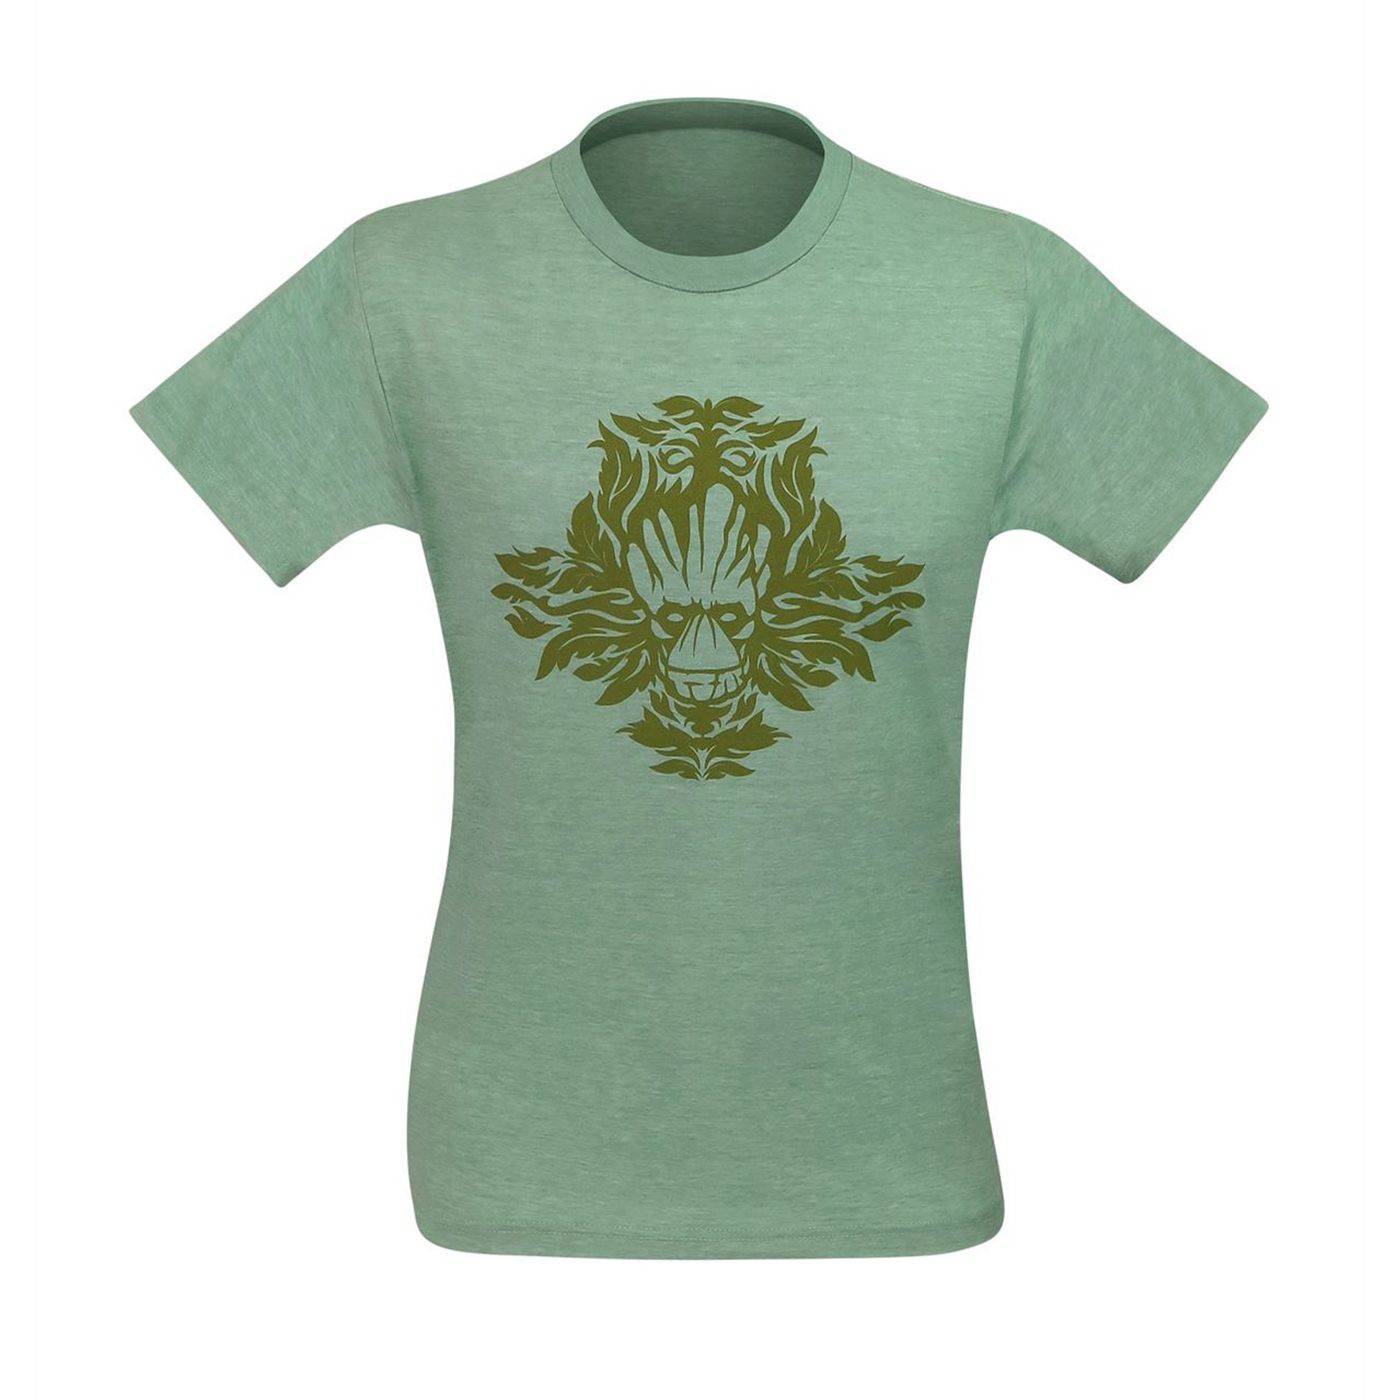 GOTG Leafy Groot Men's T-Shirt